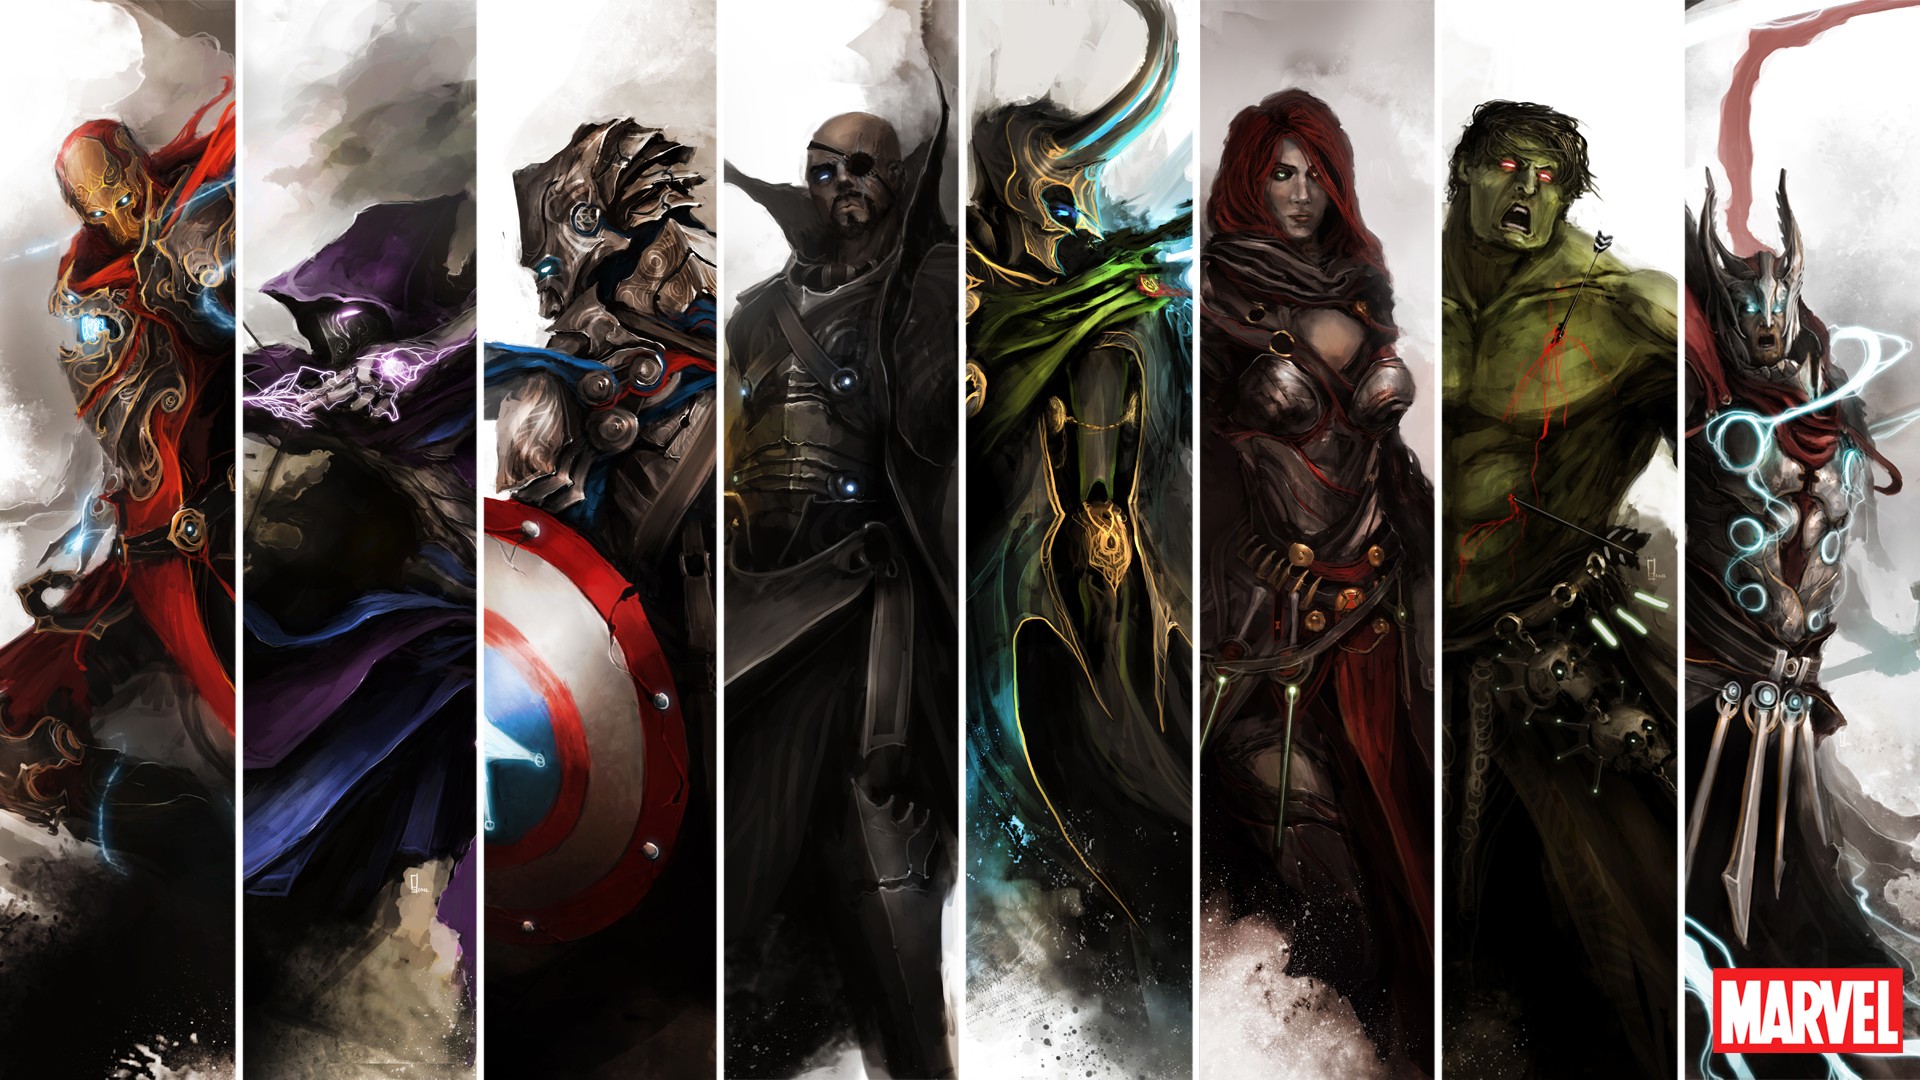 Arrow, Comics, Heroes, Medieval, Artwork, The Avengers, Iron Man, Hawkeye, Nick Fury, Black Widow, Anime, Thor, Loki, Captain America, Hulk, Panels Wallpaper